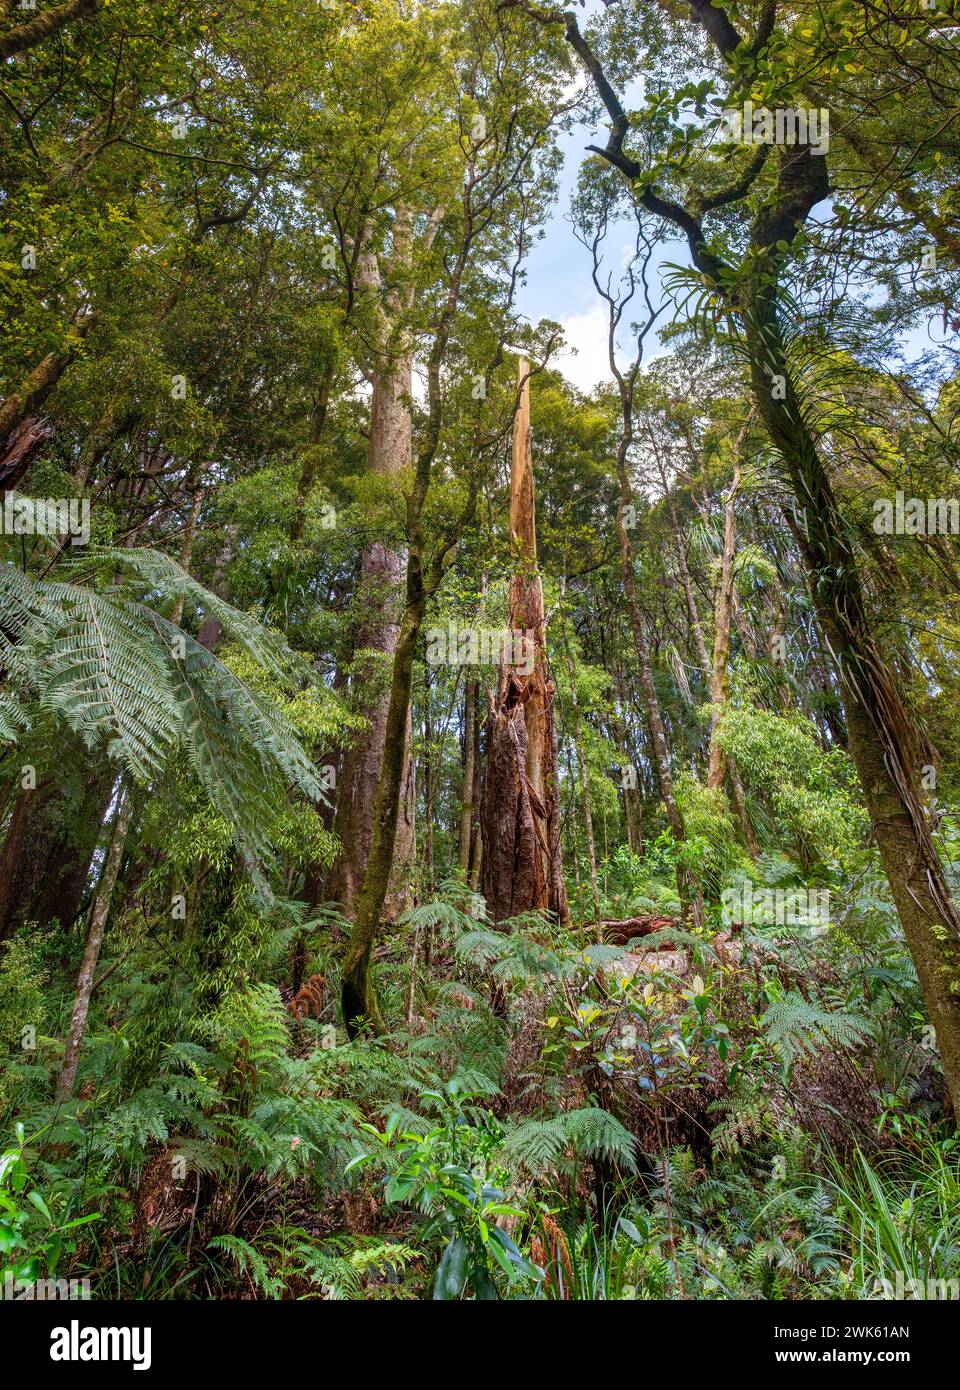 La forêt tropicale tempérée de Trounson Kauri Park, te Tai Tokerau / Northland Region, te Ika-a-Maui / North Island, Aotearoa / Nouvelle-Zélande. Trounson K Banque D'Images